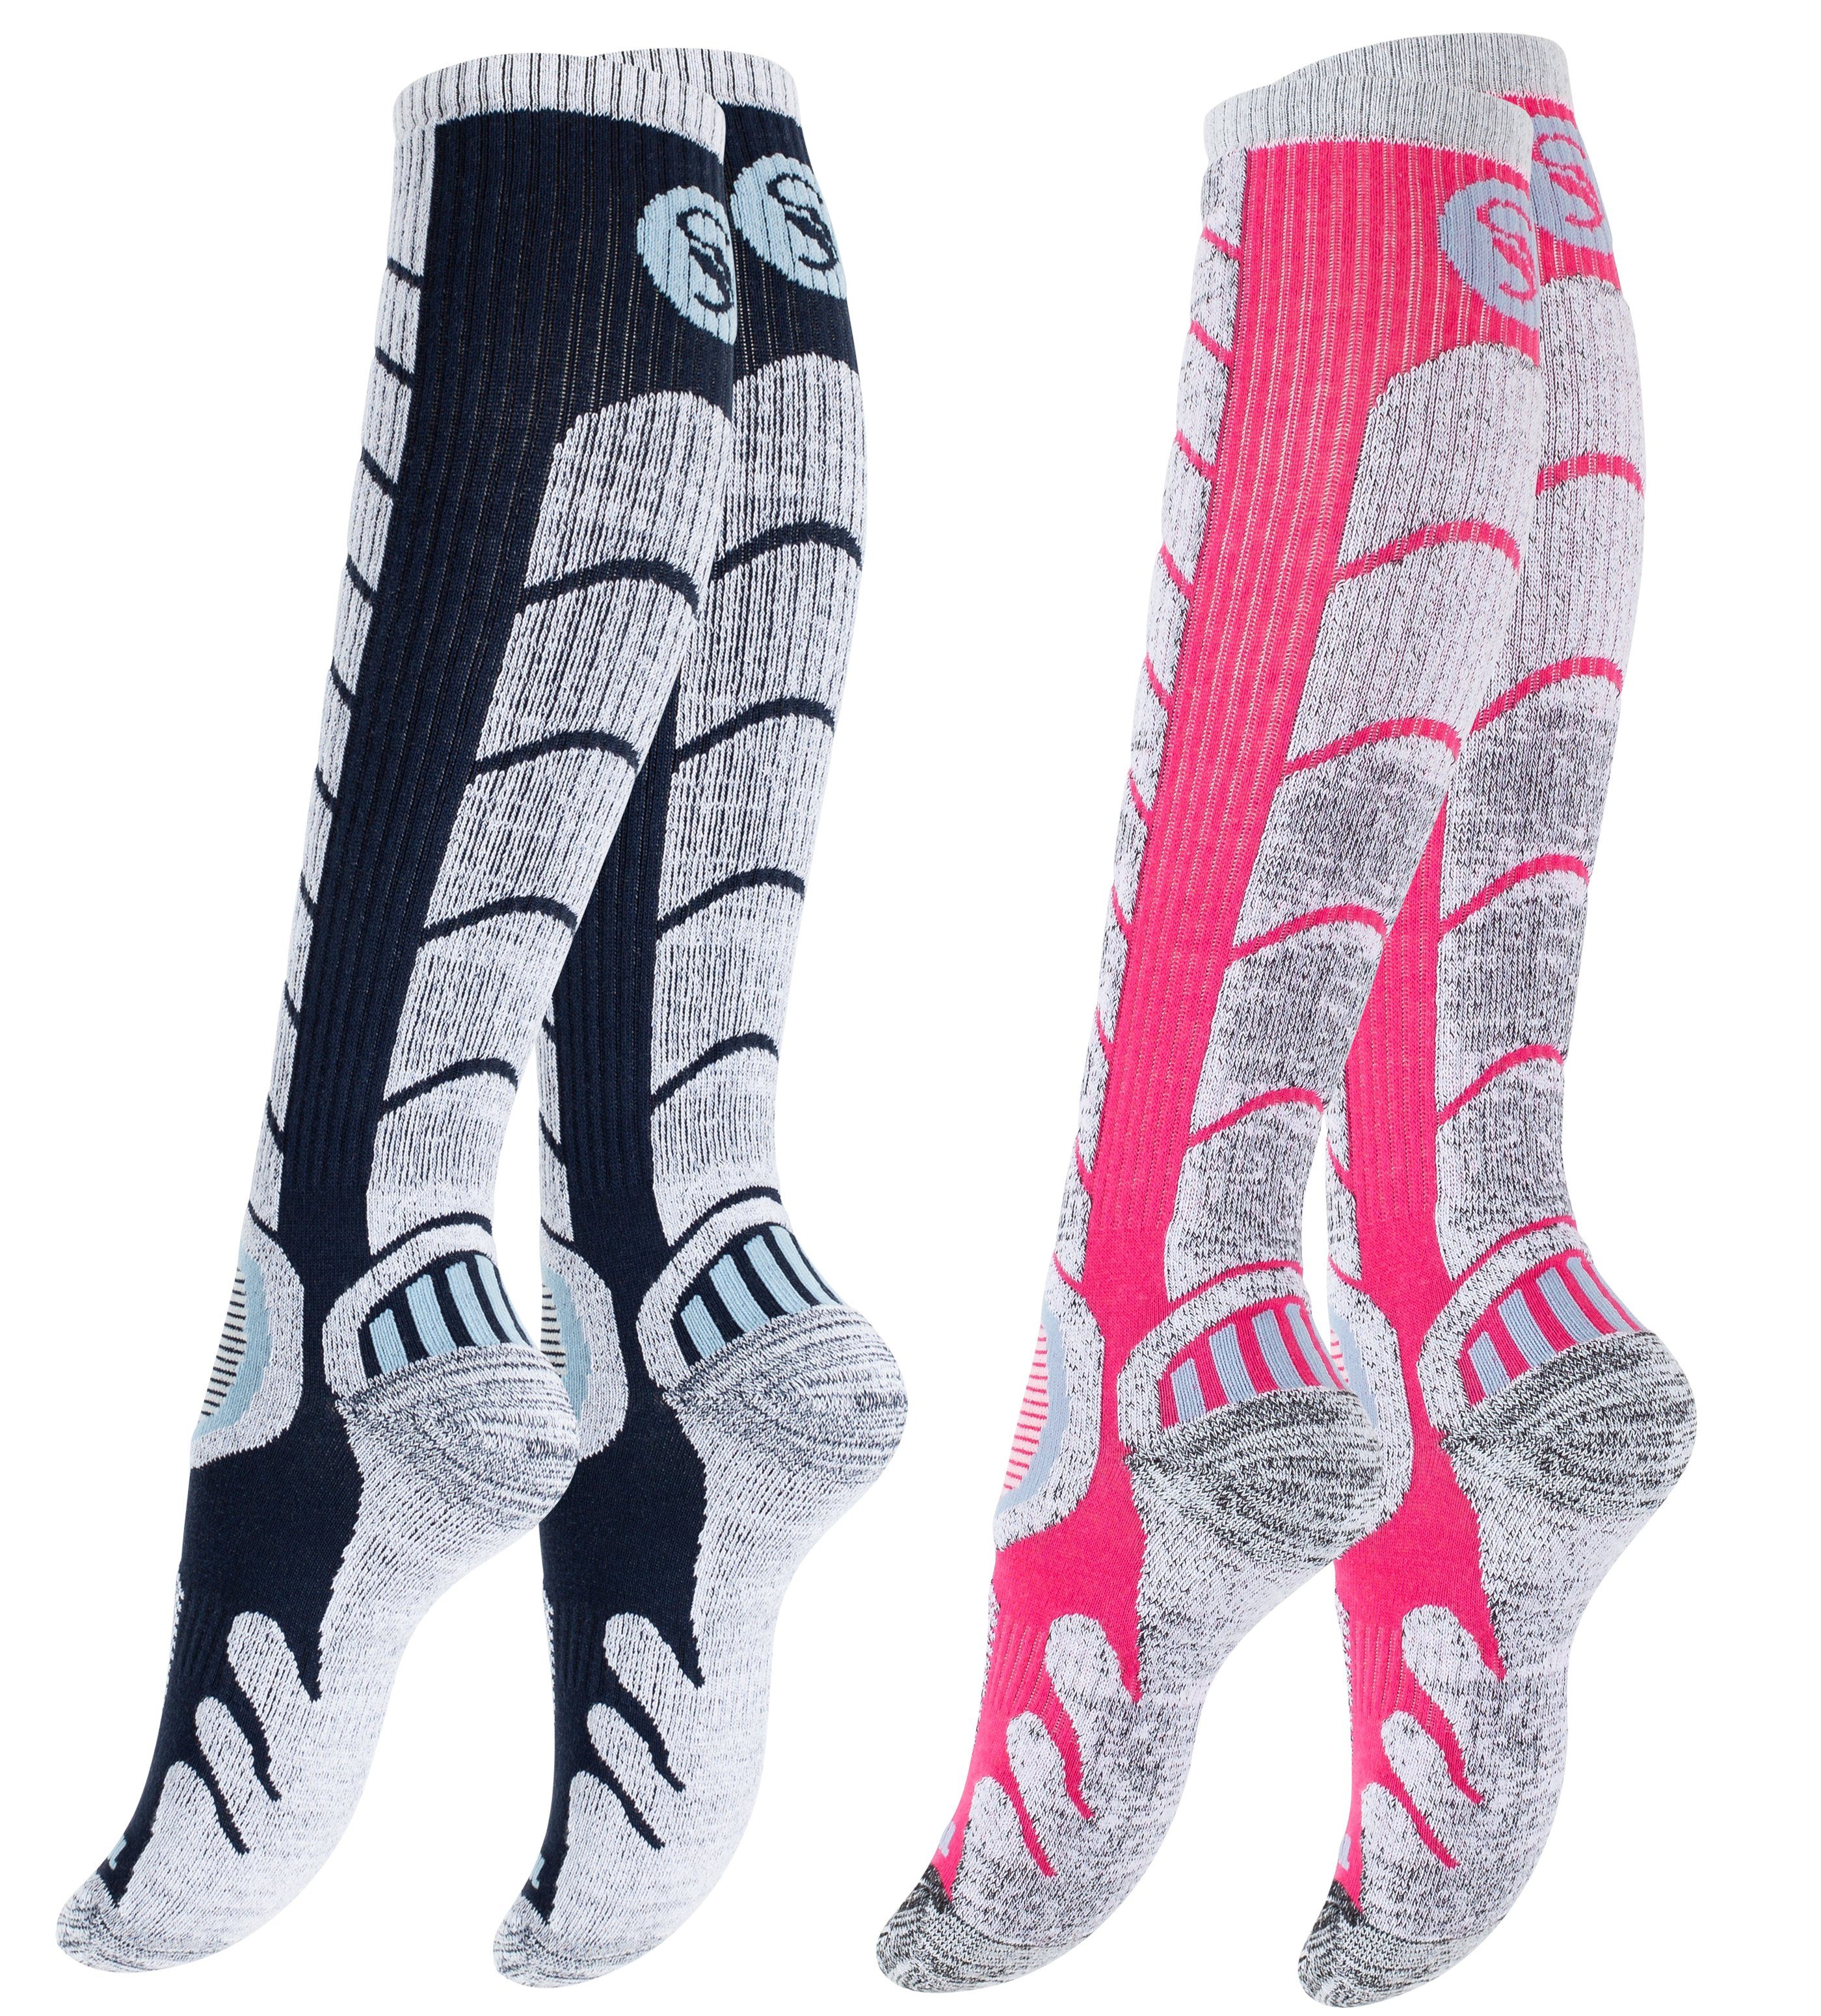 mit Paar Marine/Pink Stark Skisocken Snowboard & Socken Paar Spezialpolsterung, Soul® 2 2 Ski